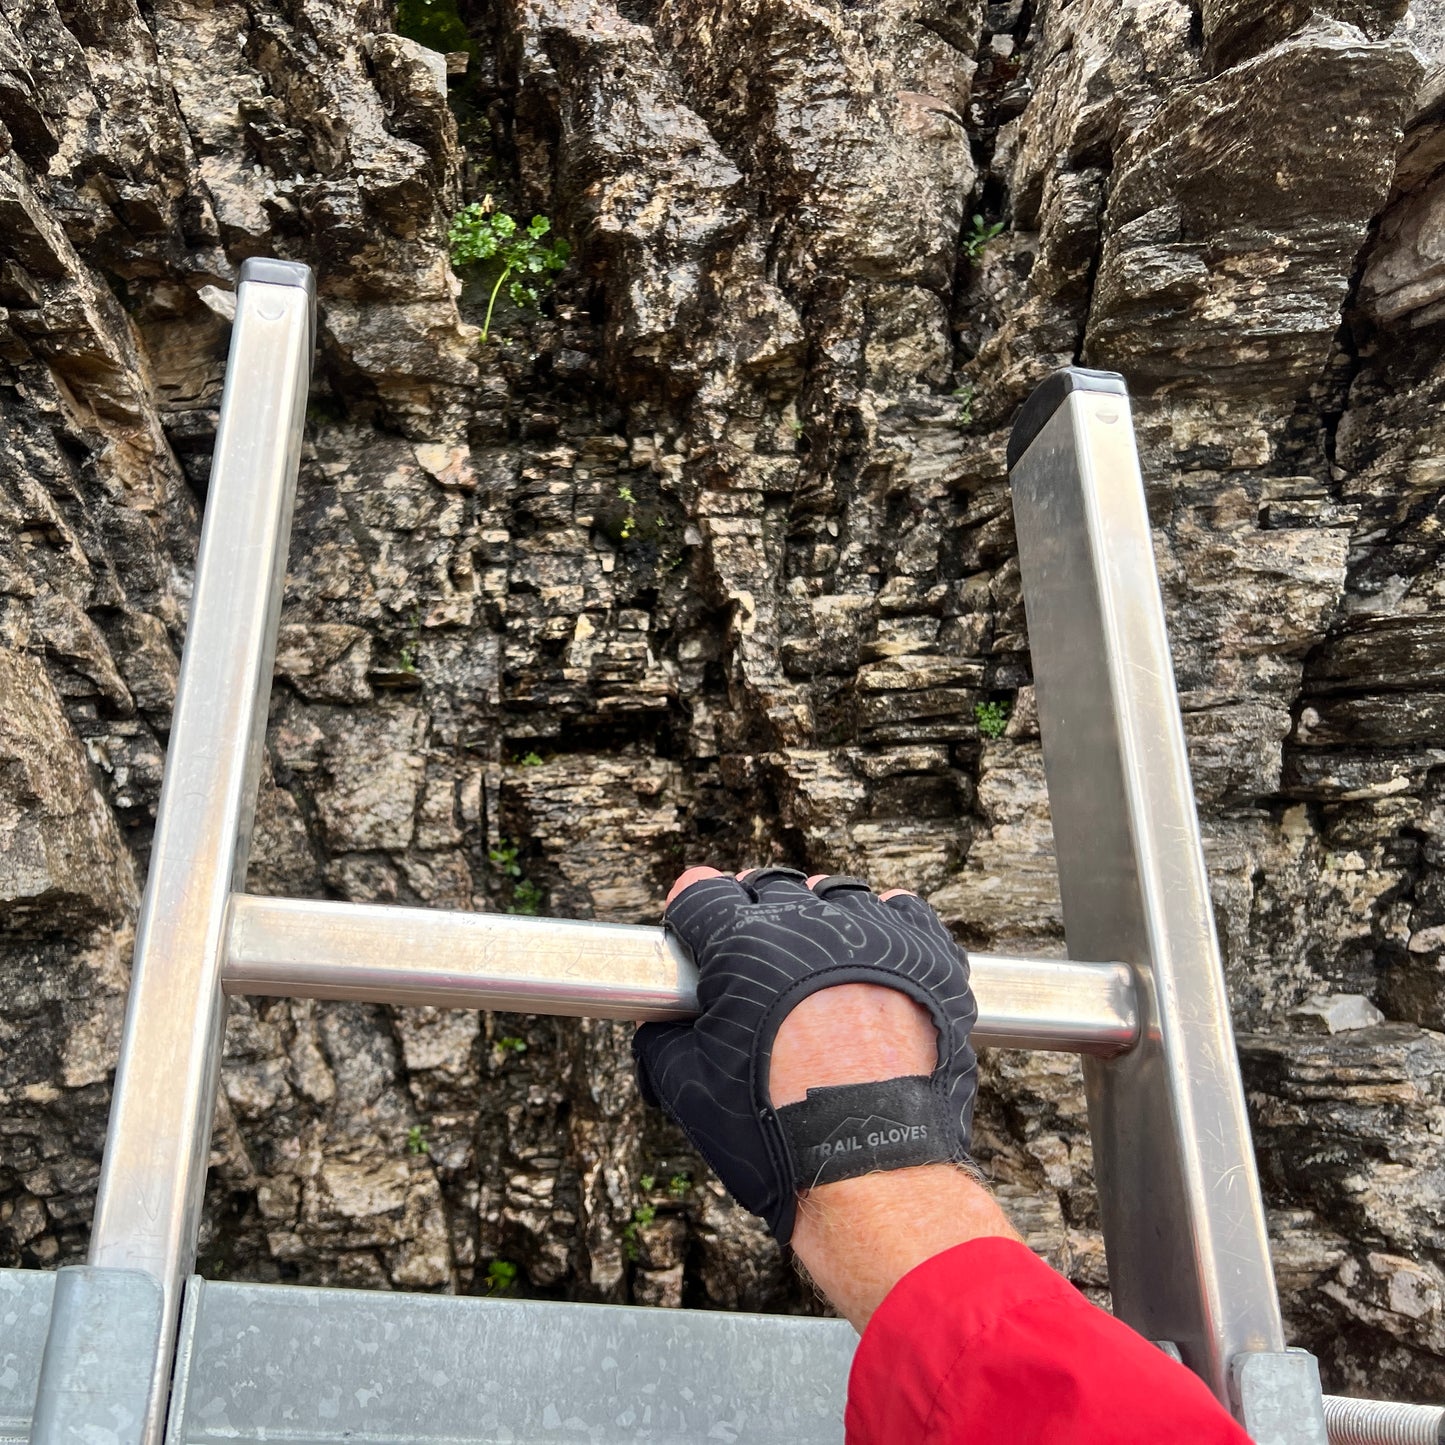 P.R. Gear Trail Gloves on the Rottstock Via Ferrata in Grindelwald, Switzerland